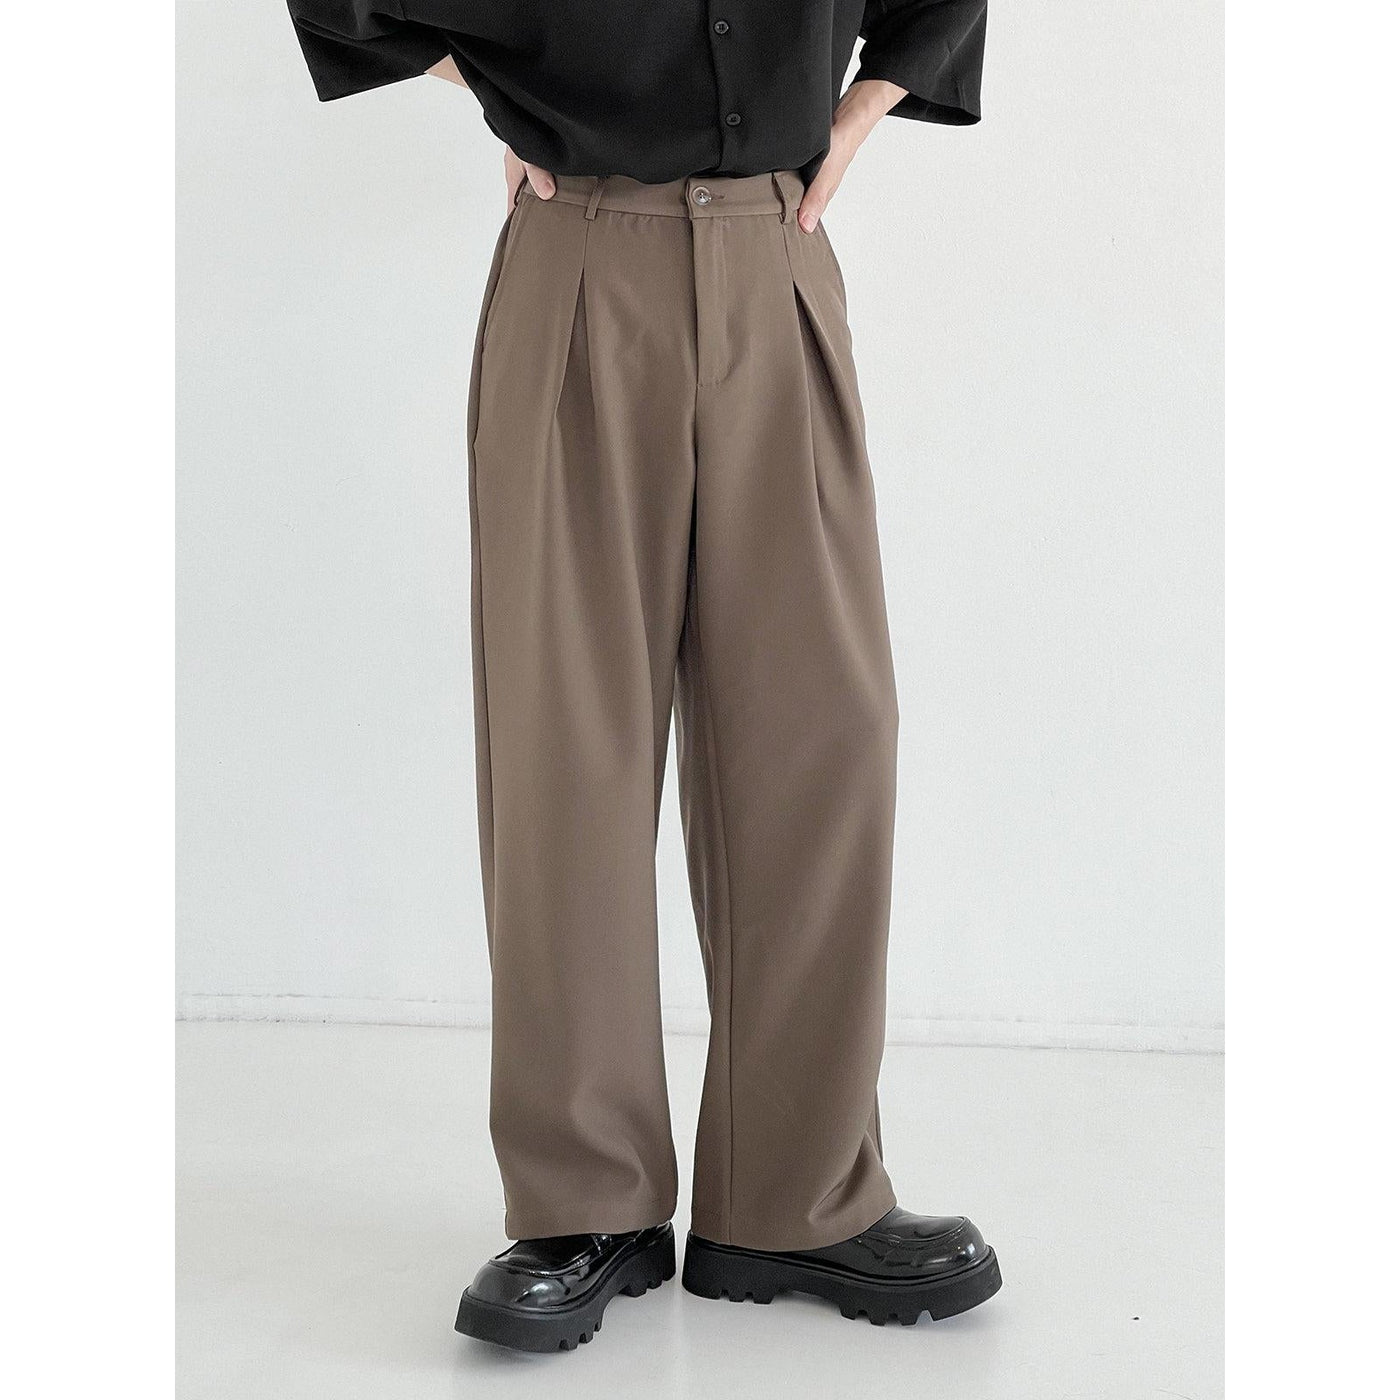 Zhou Essential One-Block Pants-korean-fashion-Pants-Zhou's Closet-OH Garments